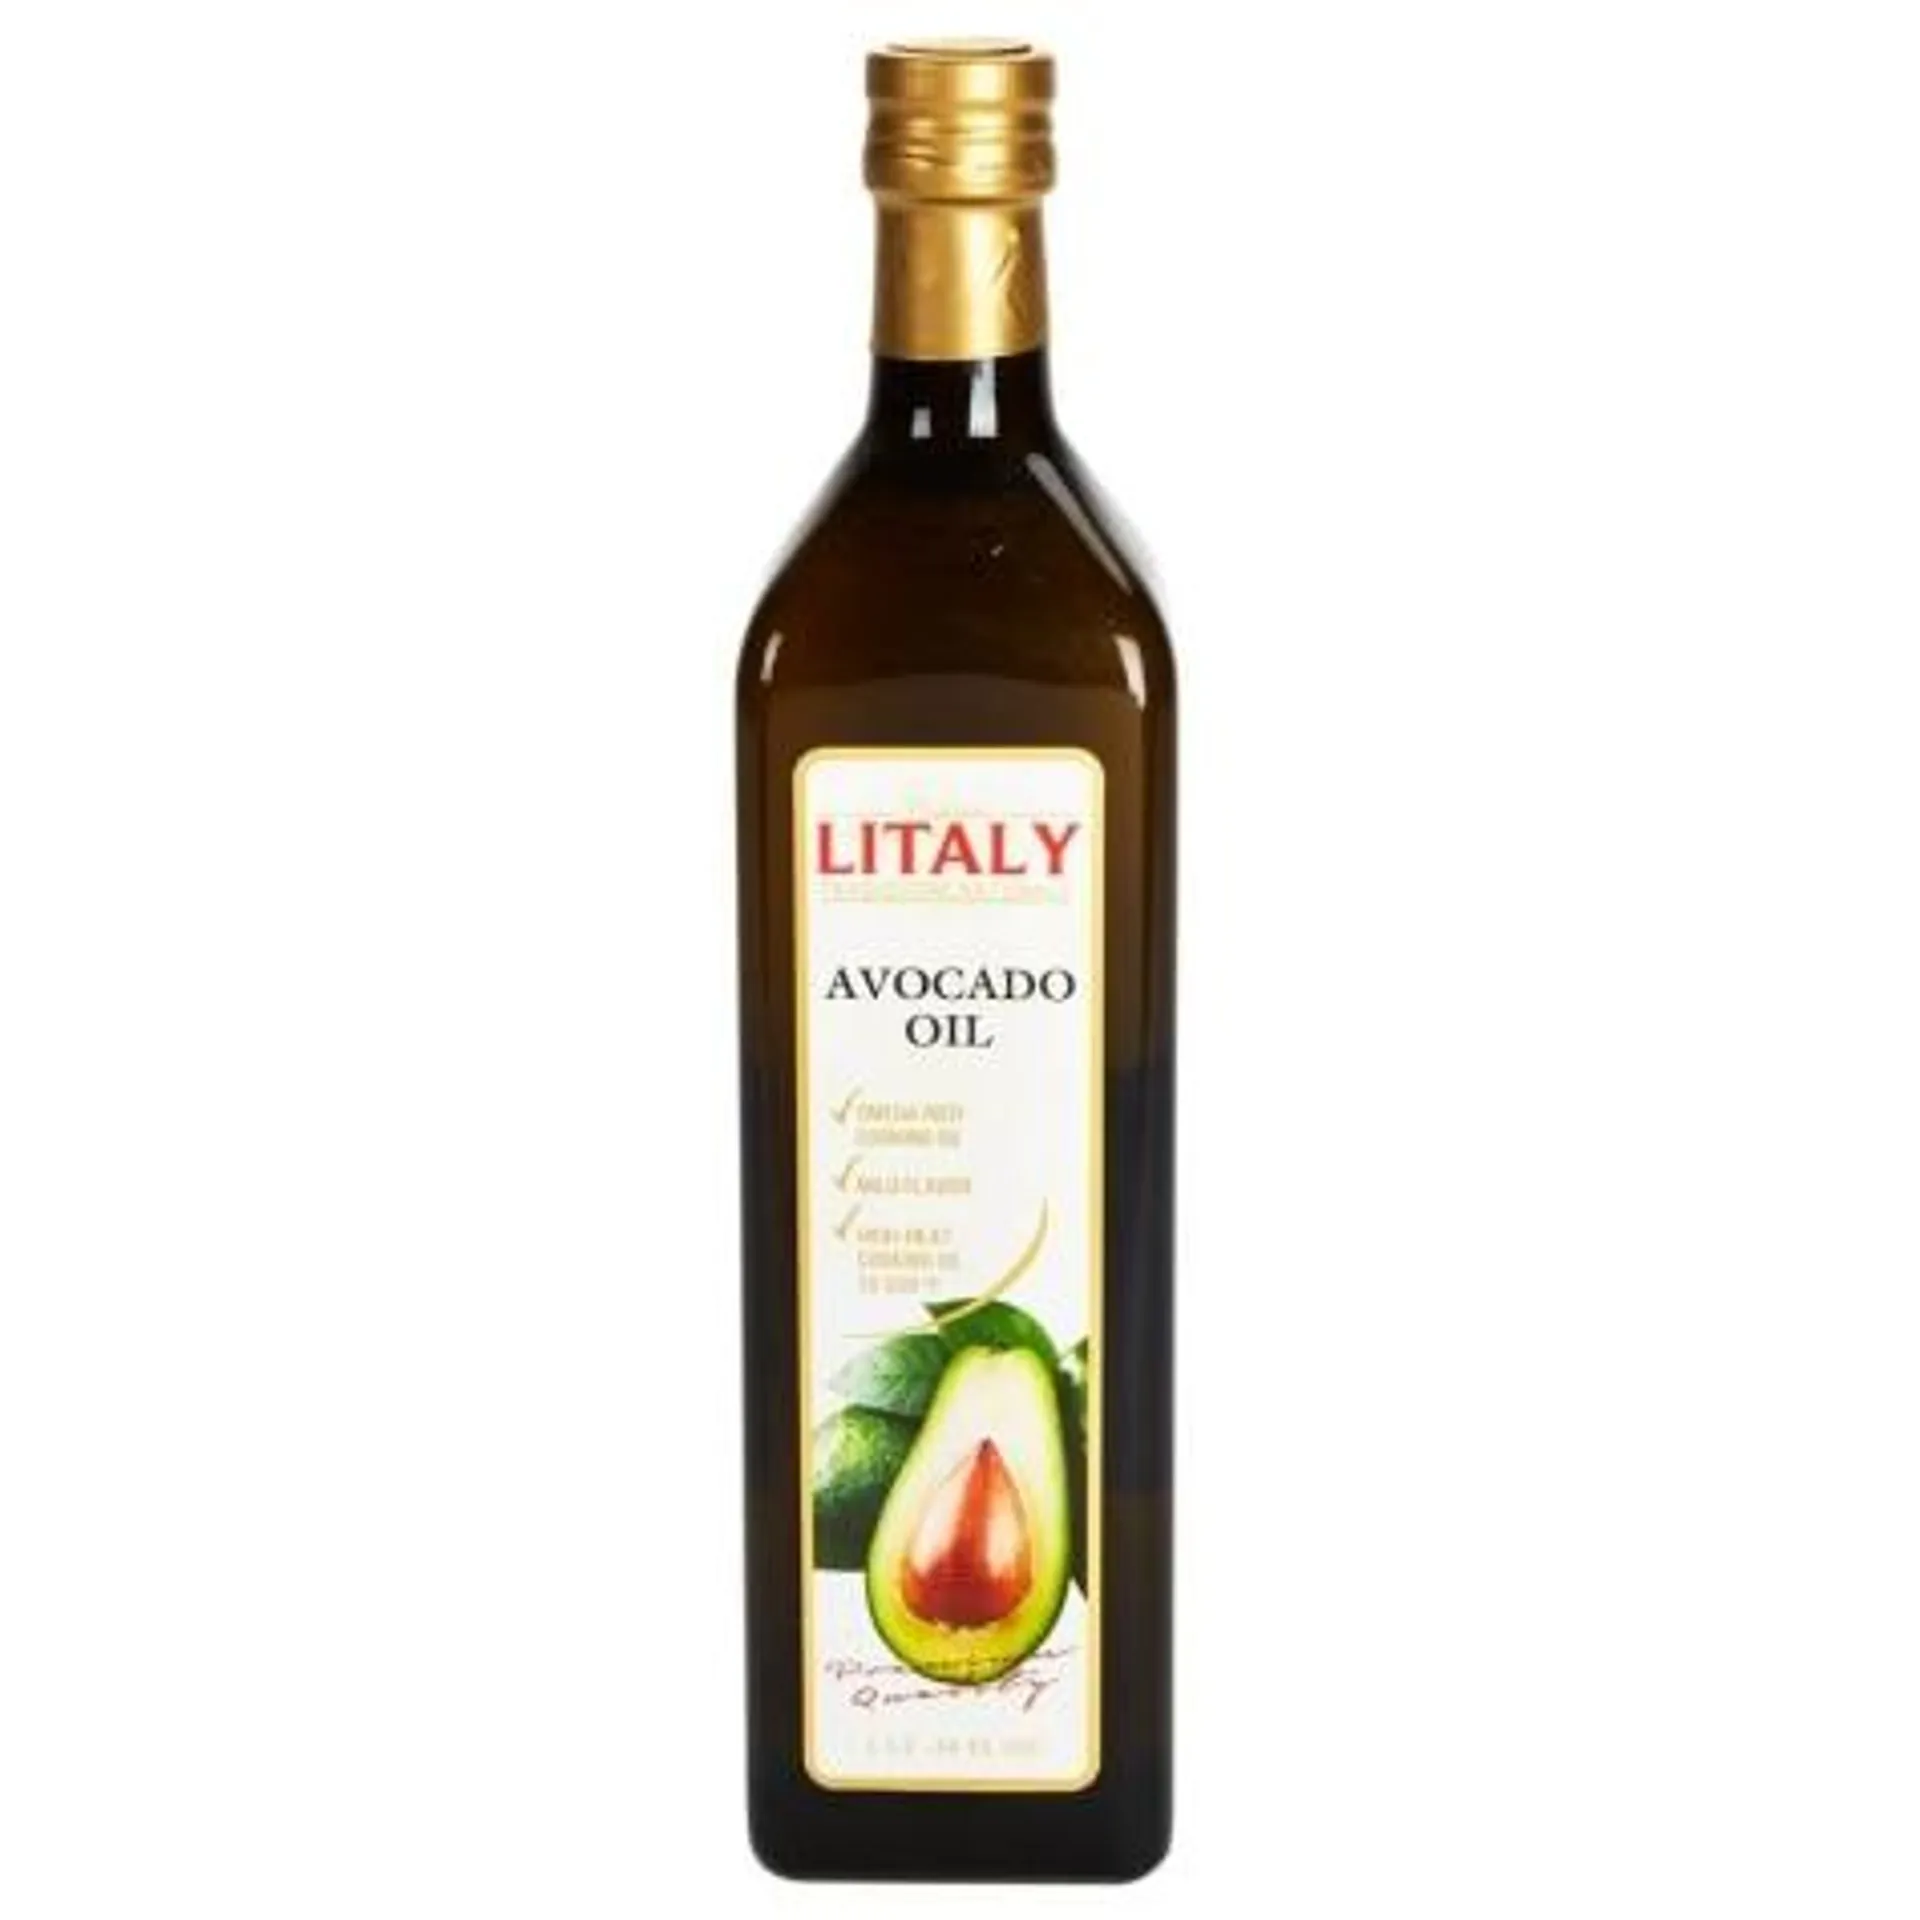 Litaly Avocado Oil, 34 oz